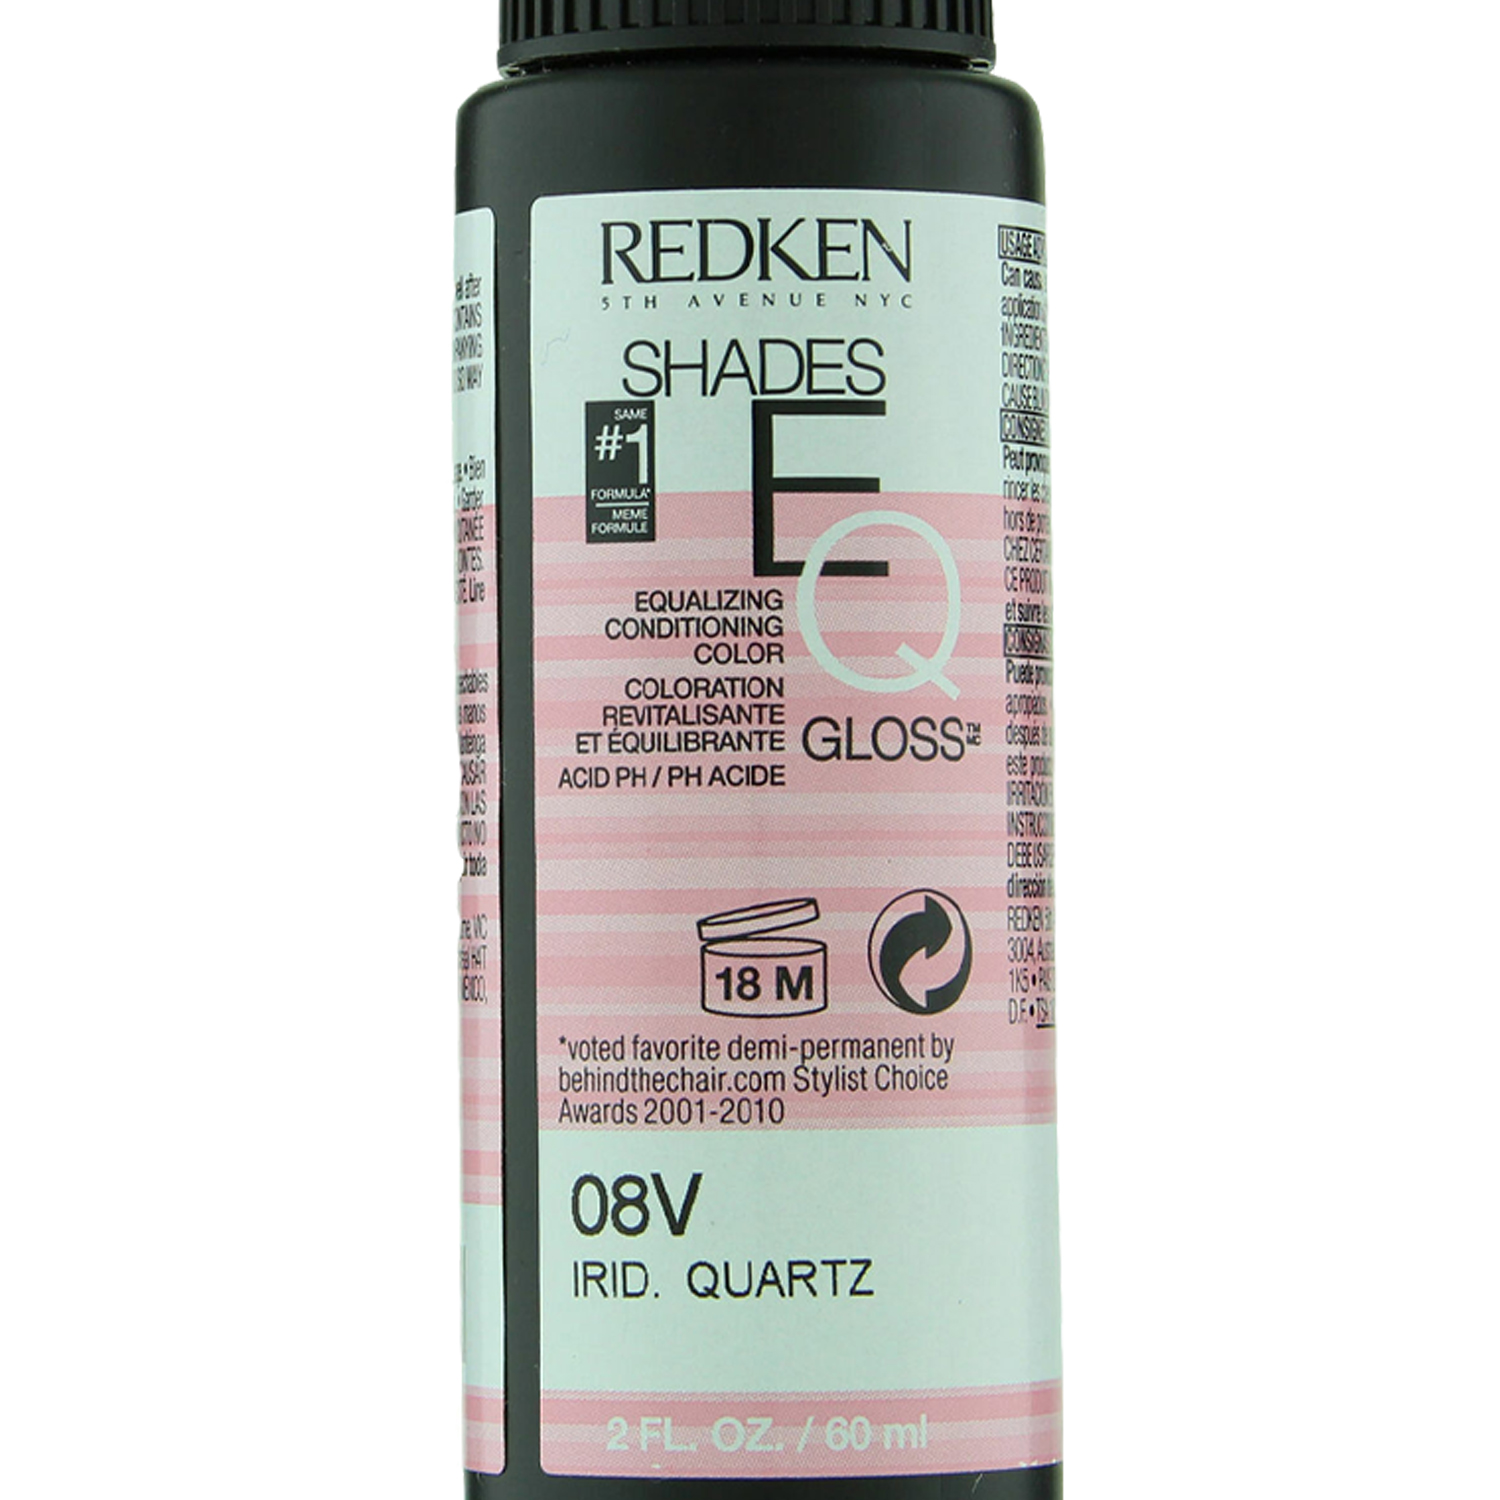 Redken Shades Eq Hair Color Gloss 08V - Irid. Quartz, 2 Oz - image 4 of 5